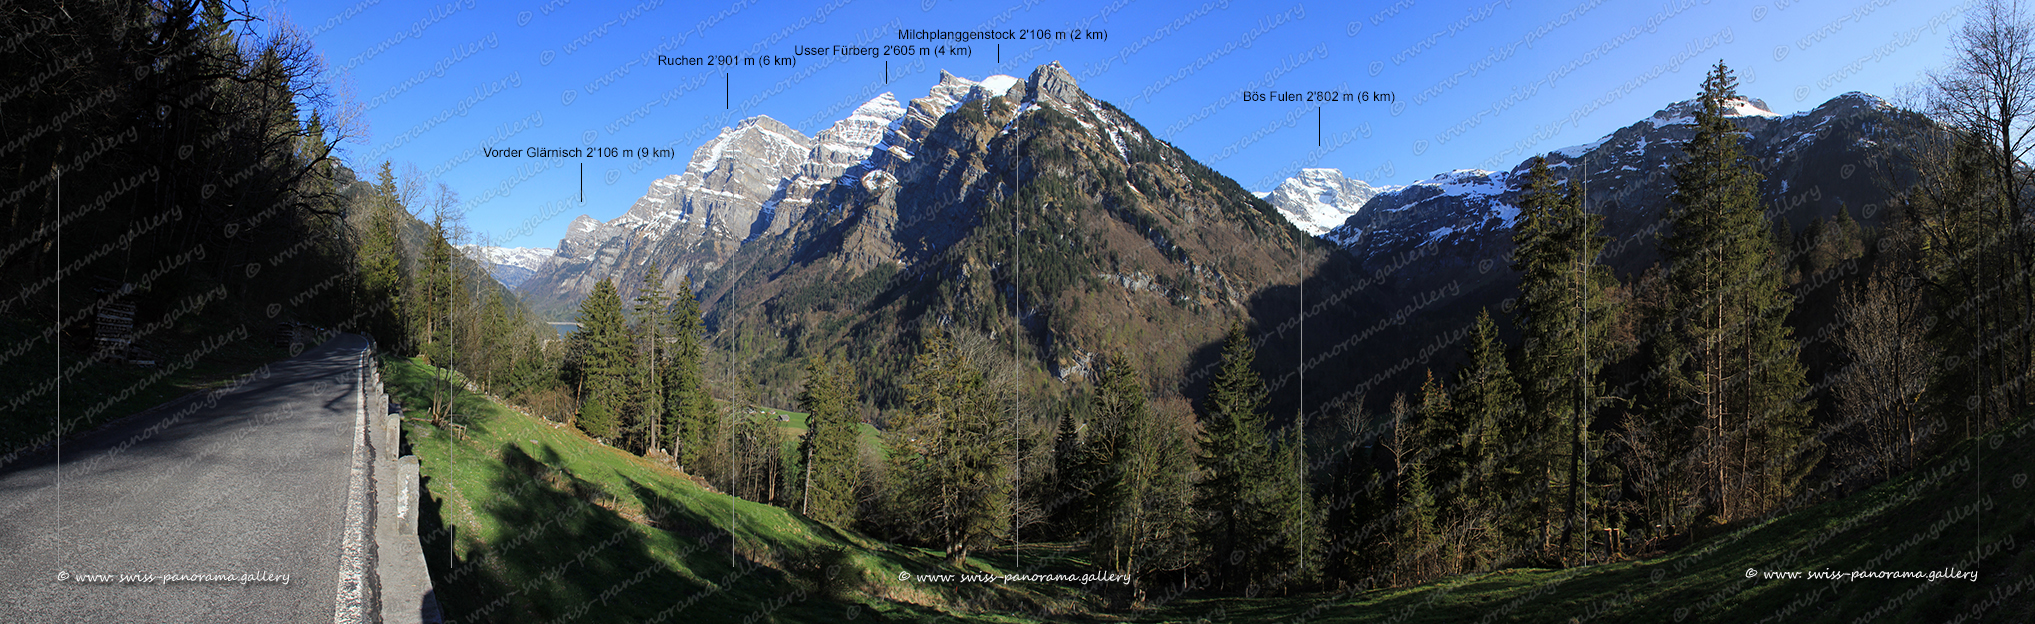 Schweizer Alpenpanorama Klöntalersee swiss-panorama.gallery